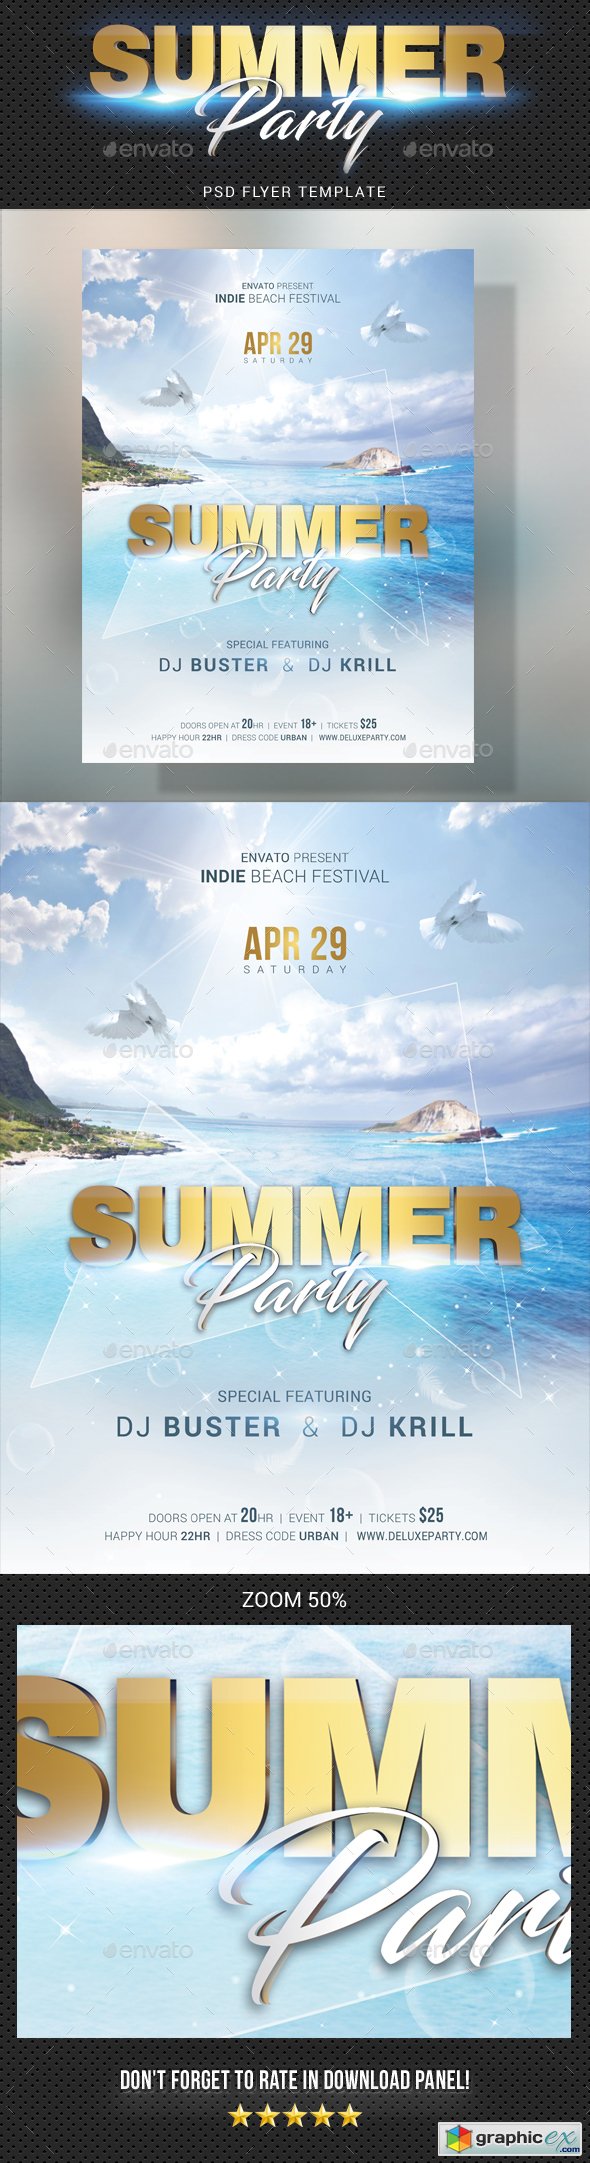 Summer Dj Party Flyer